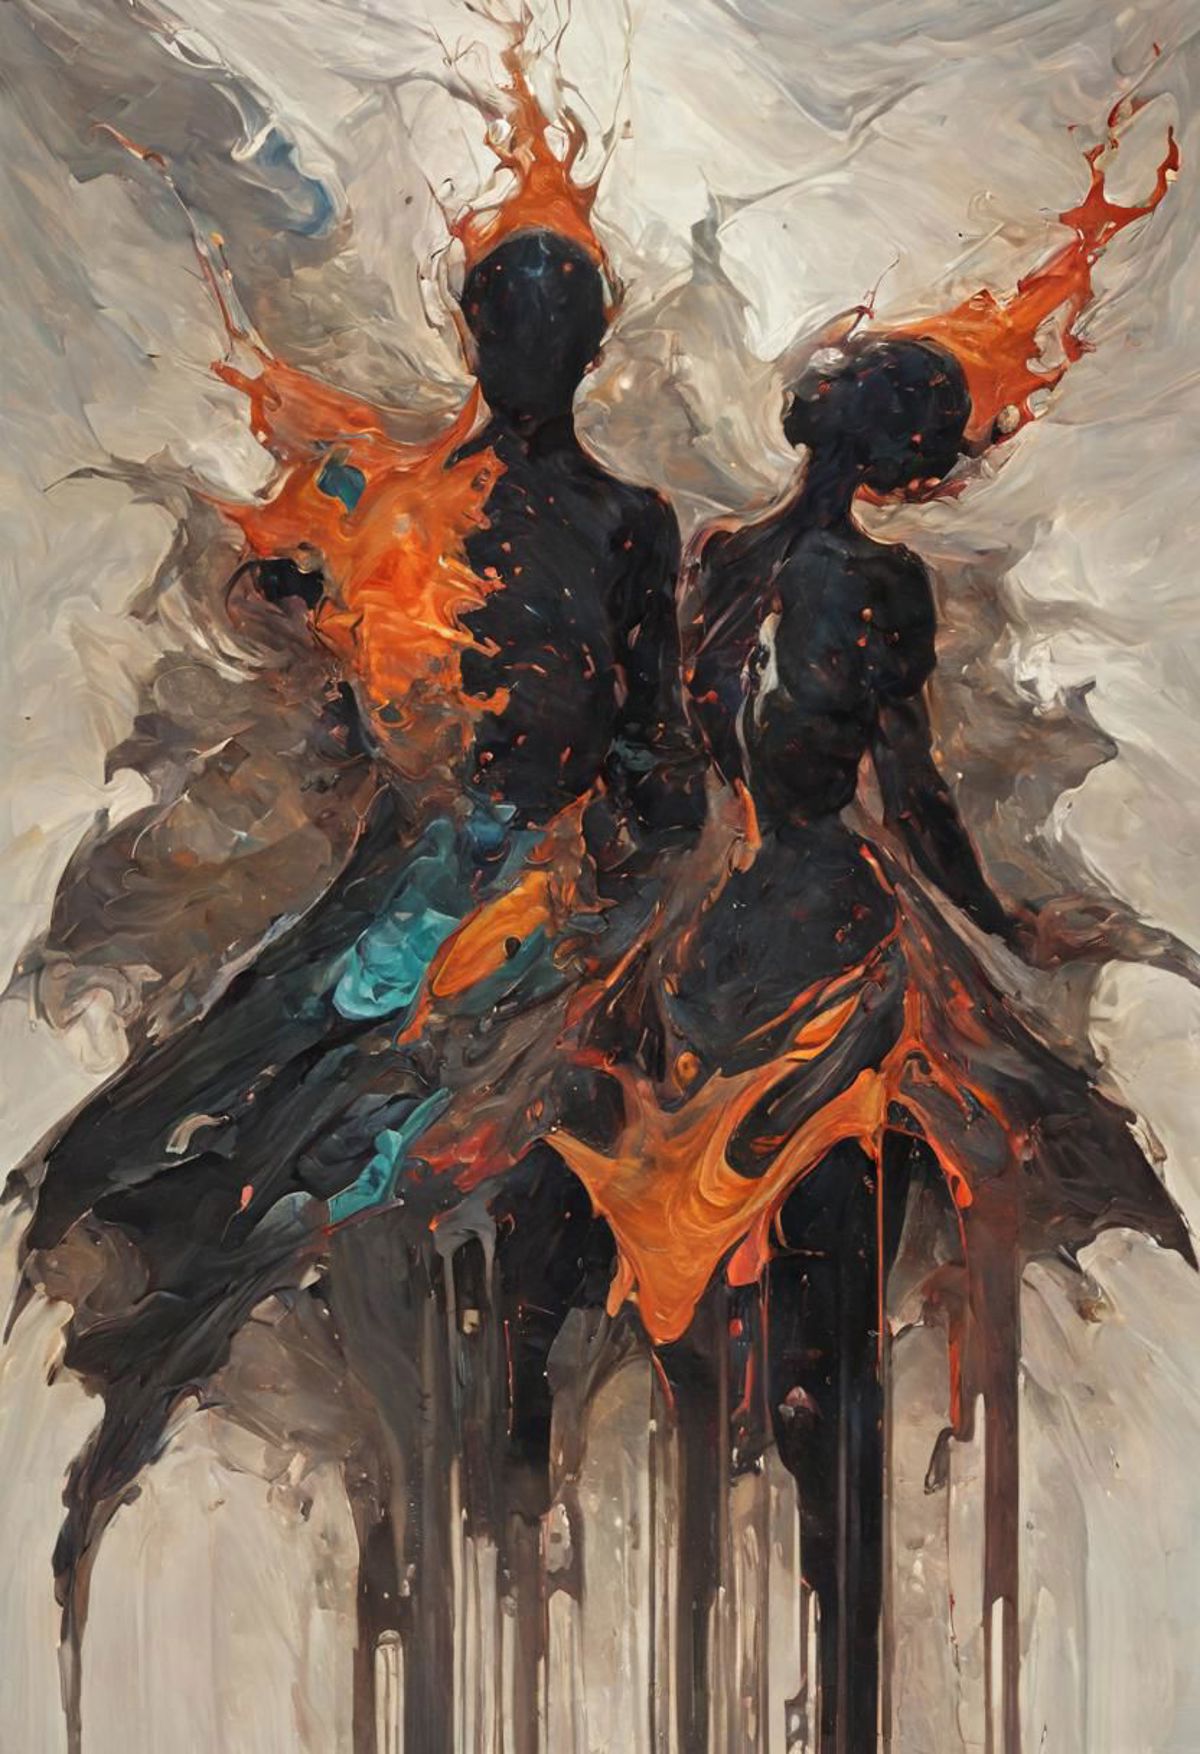 Dark Fantasy Art image by Ajuro